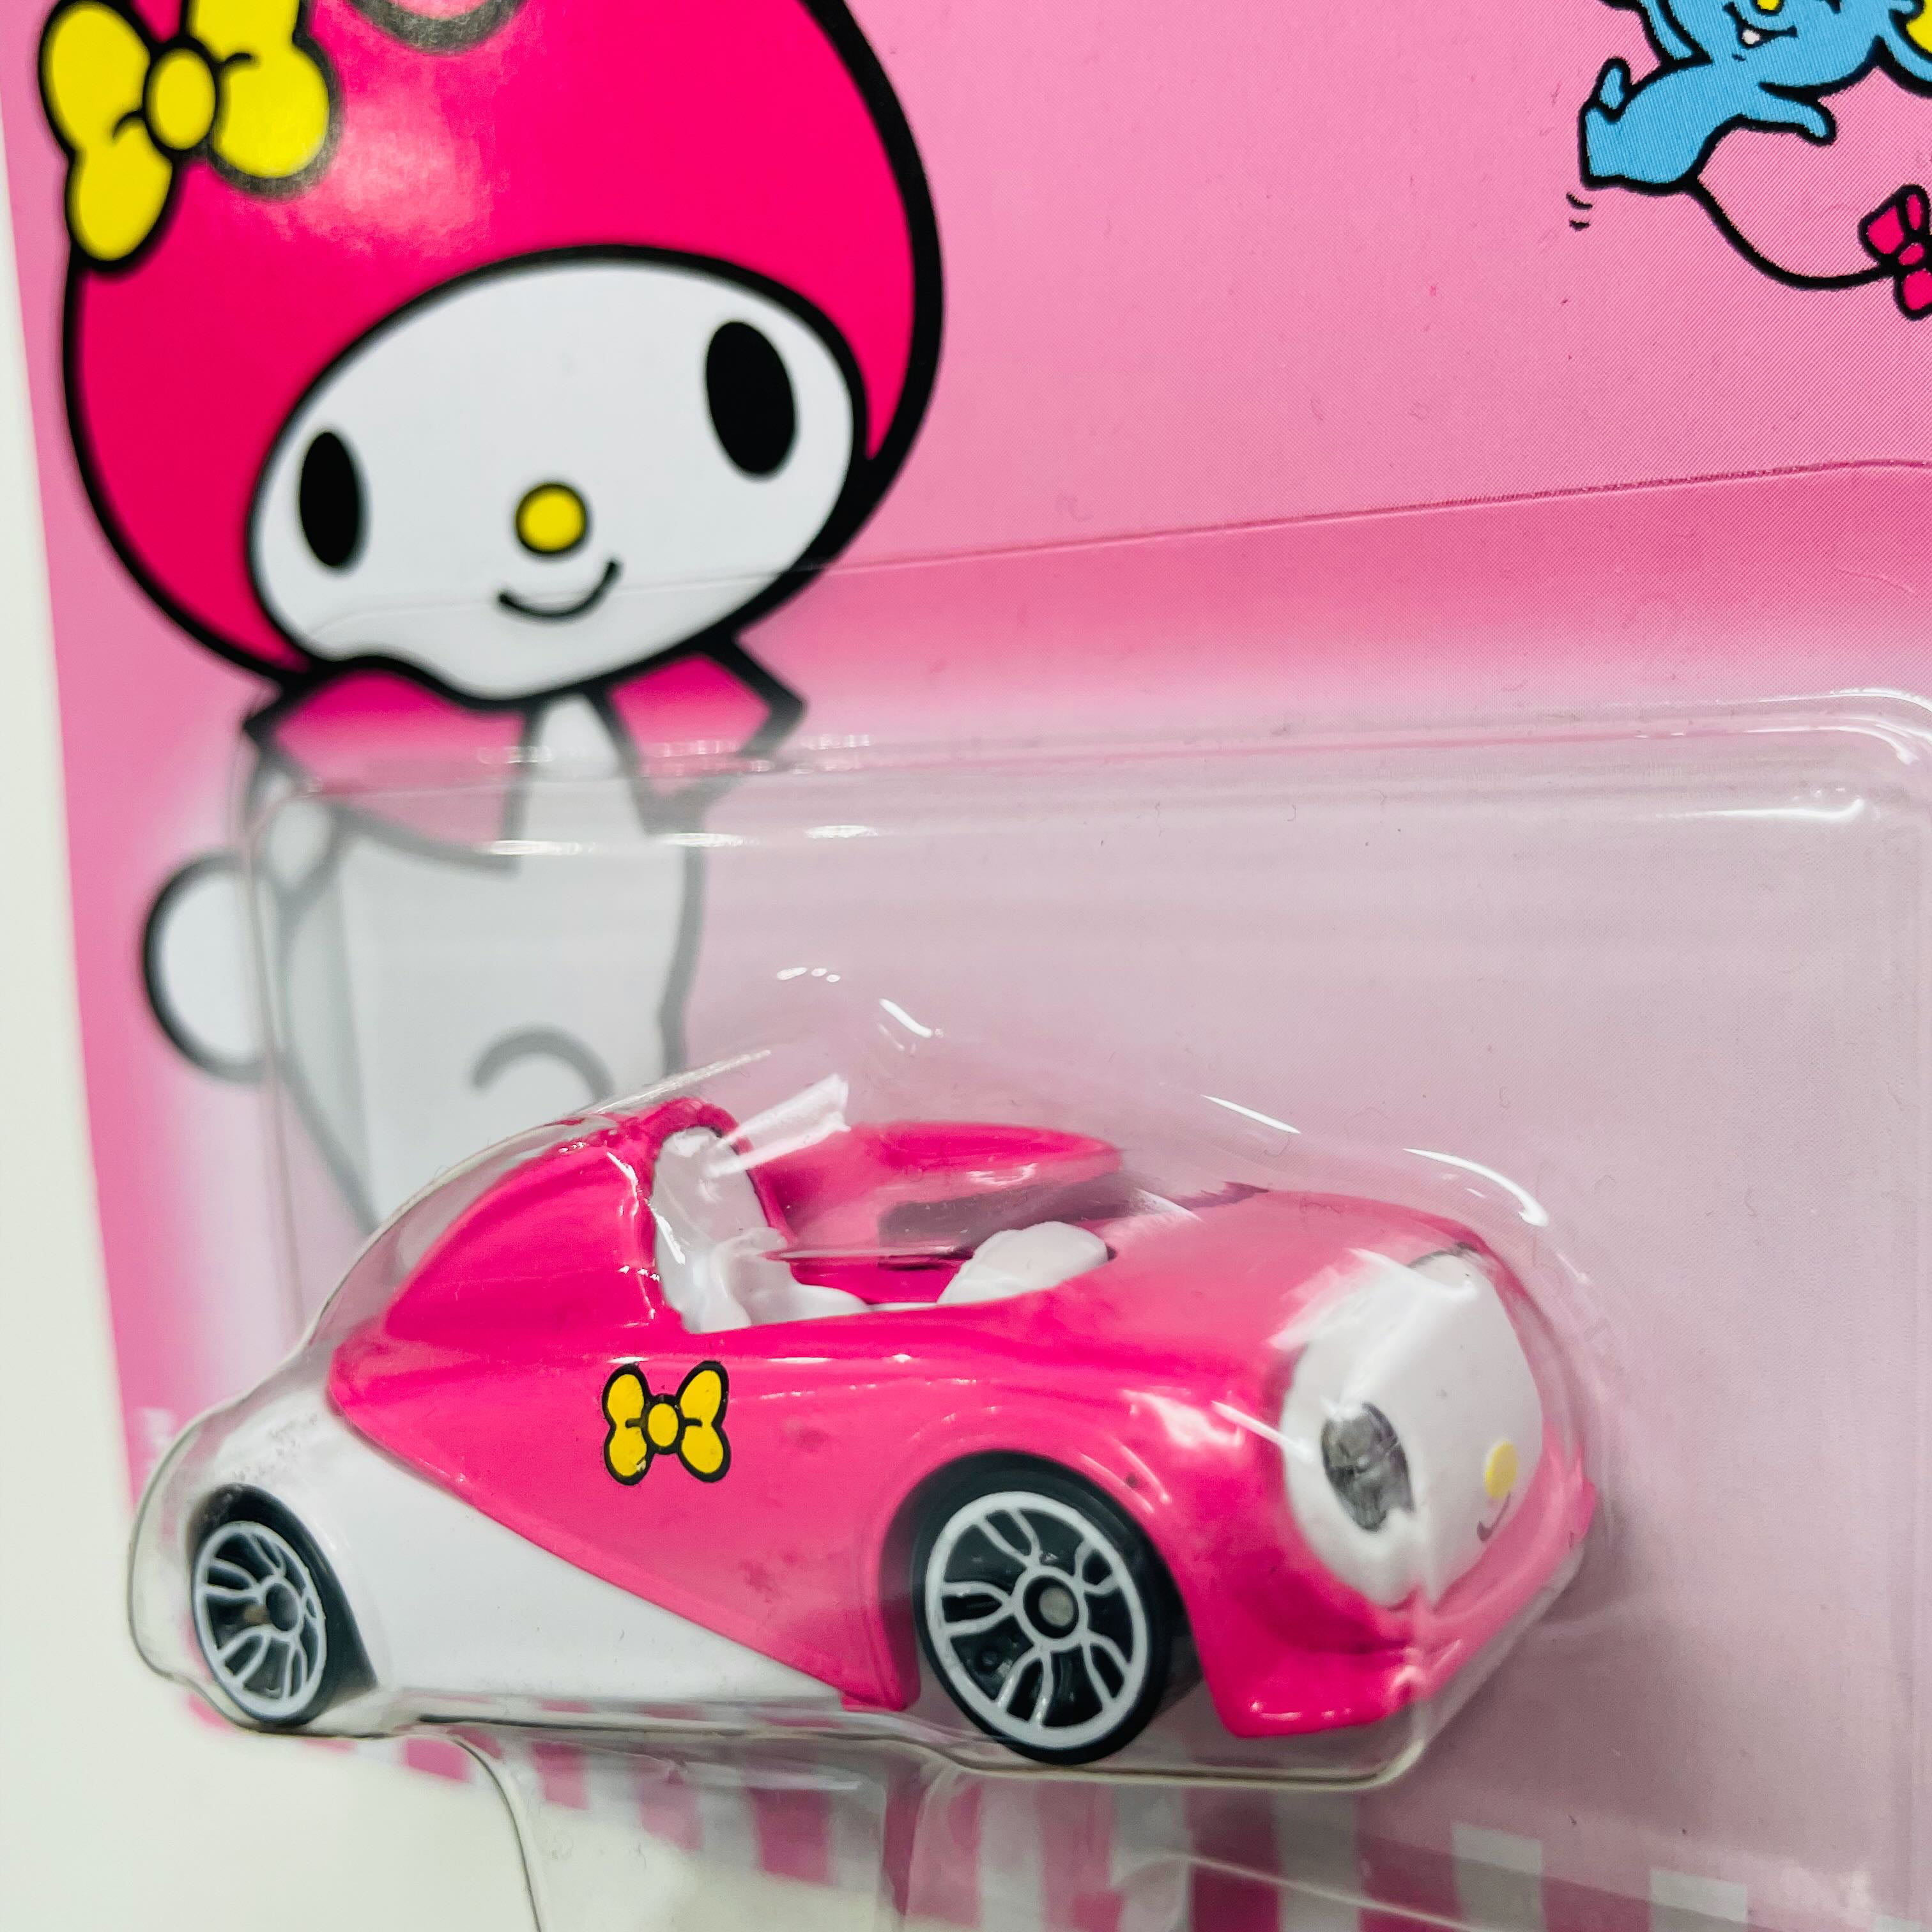  Hot Wheels Sanrio Character Car 5-Pack, Toy Cars in 1:64 Scale: Hello  Kitty, Keroppi, Gudetama, Cinnamaroll & My Melody : Toys & Games